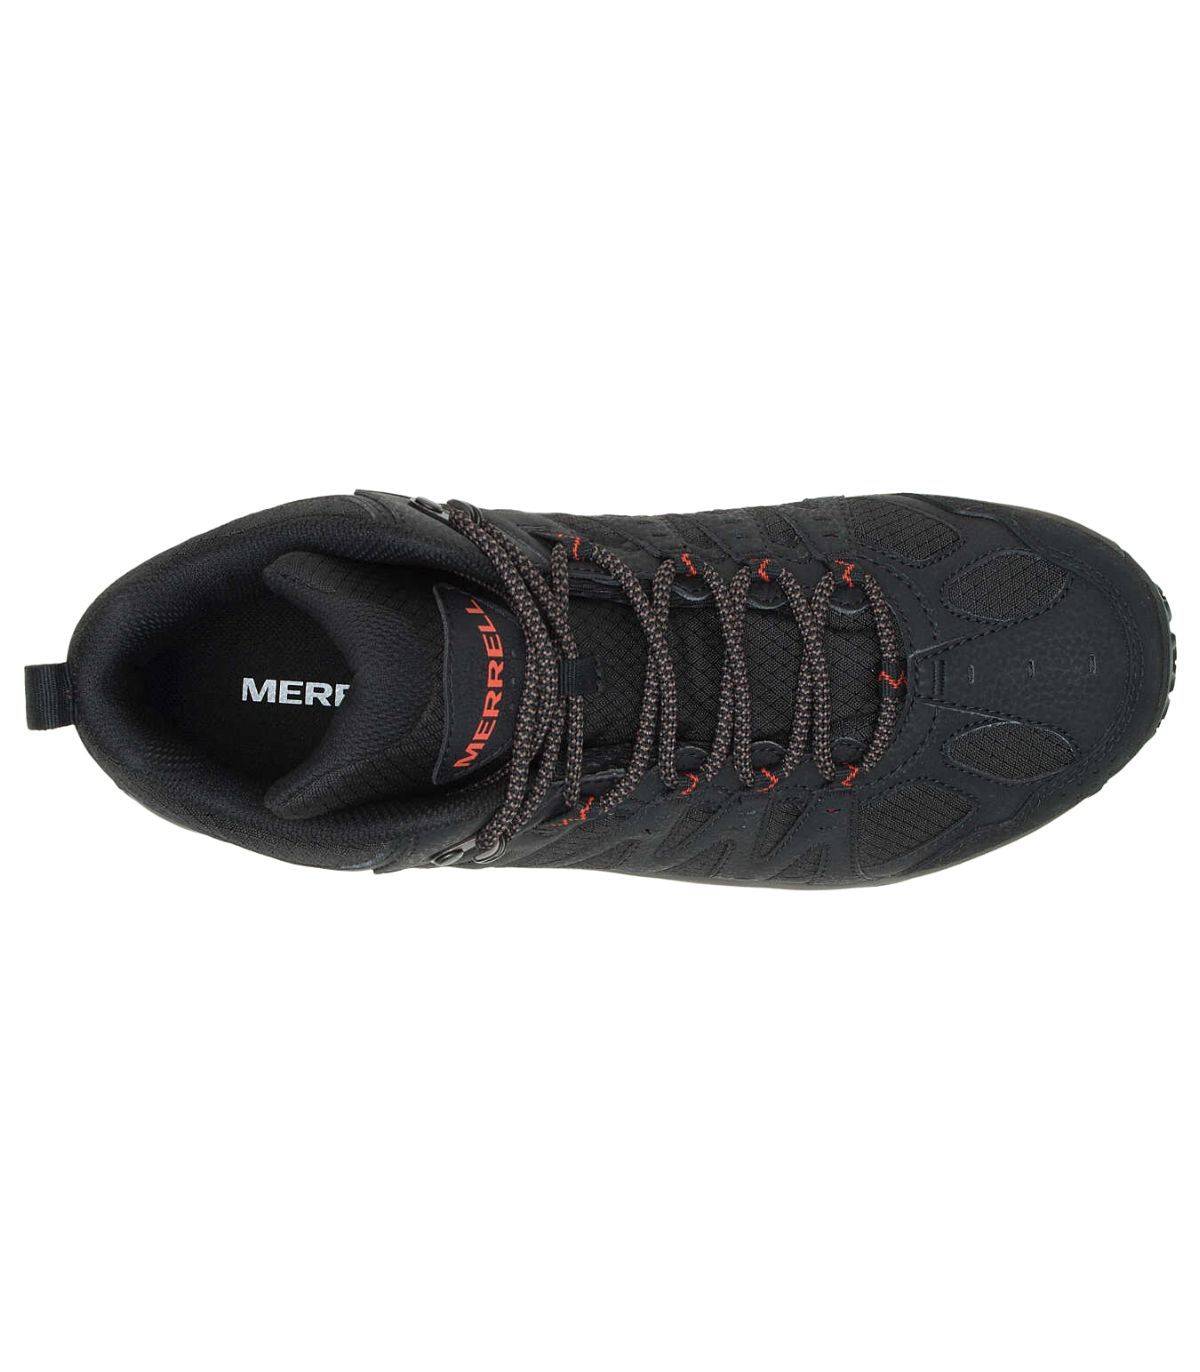 Merrell Zapatillas Senderismo Hombre - Moab 3 Mid GORE-TEX - negro/gris